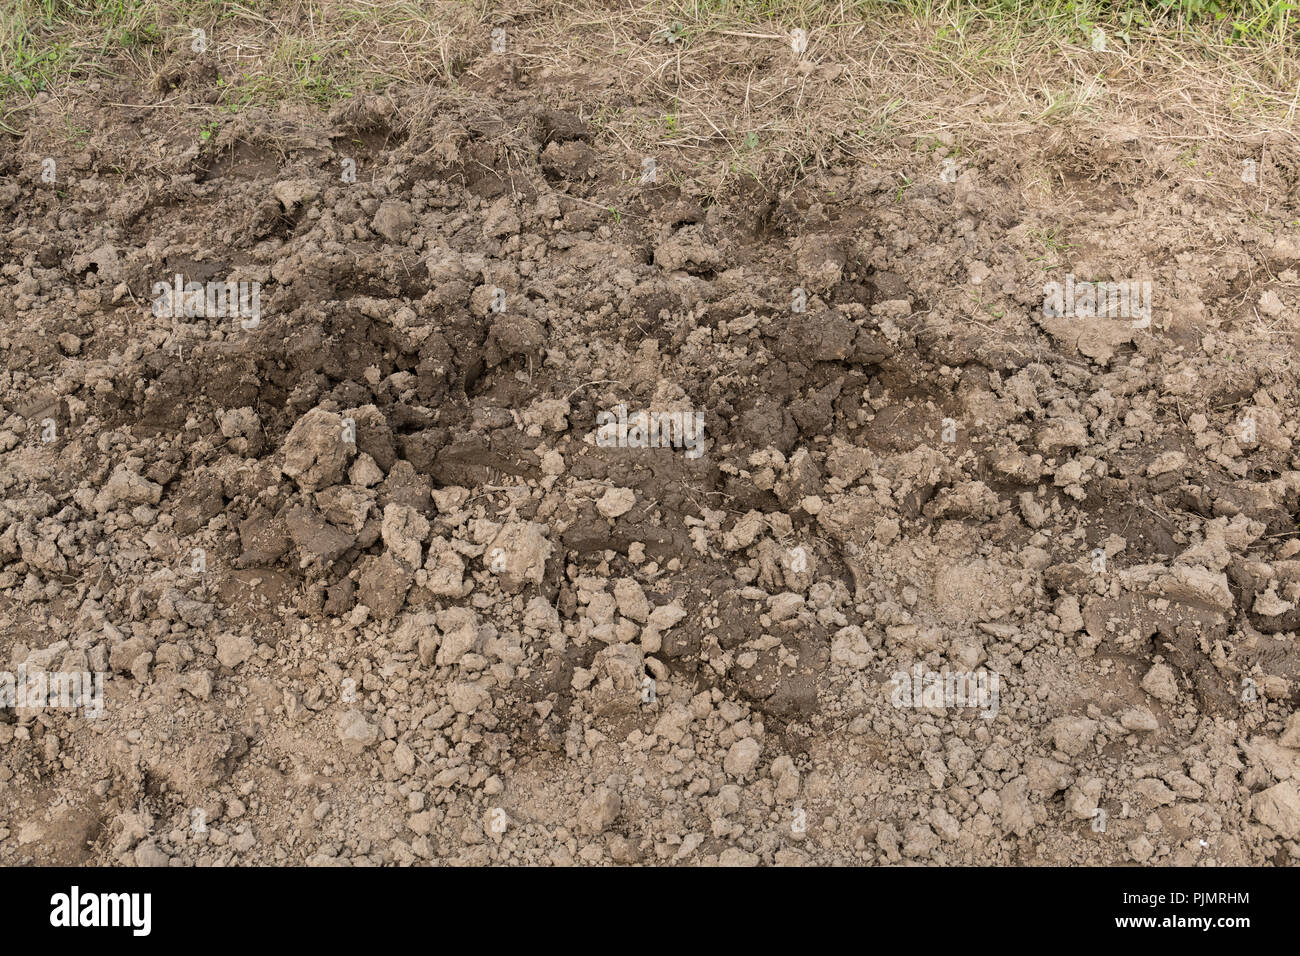 Sporcizia o suolo close-up, ambientale, texture pattern. Foto Stock